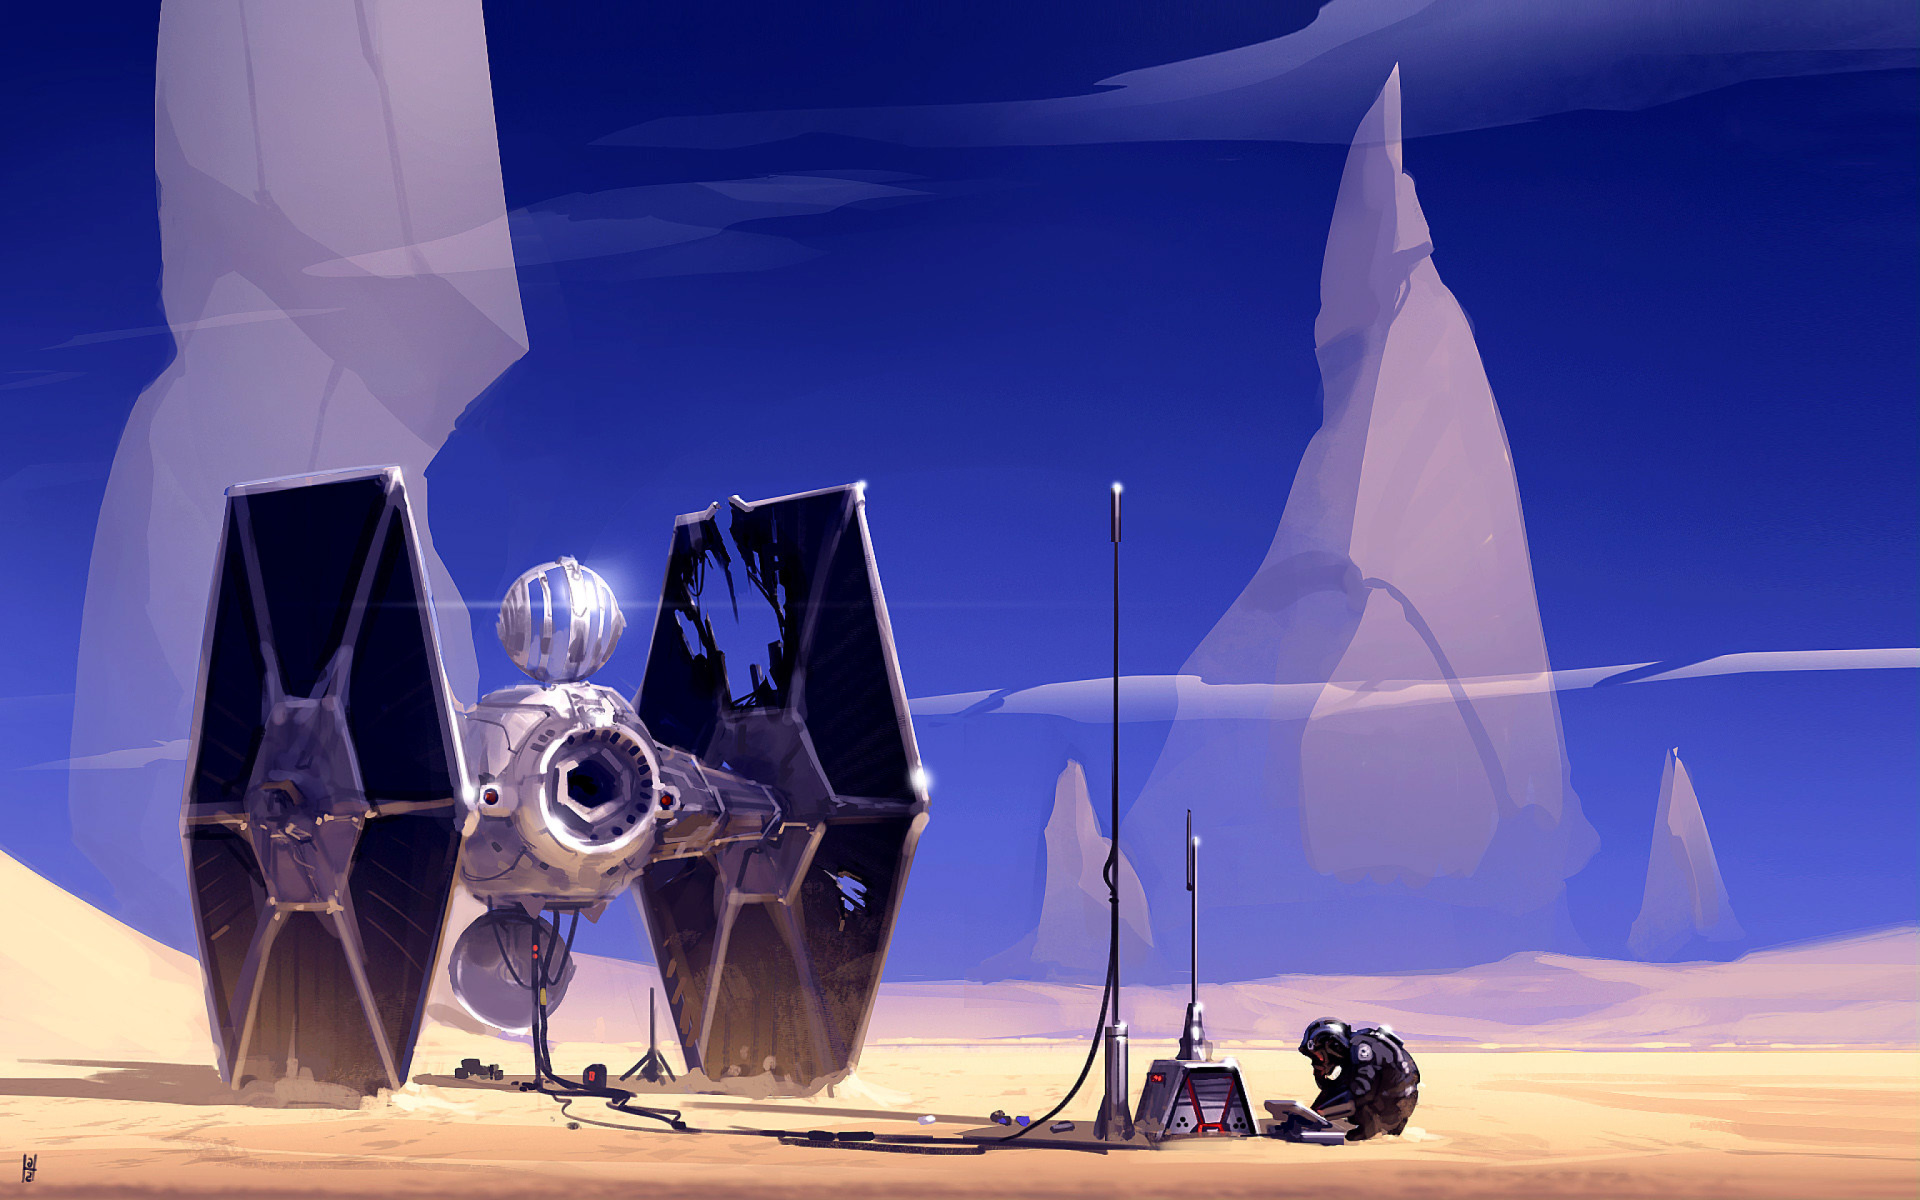 Spaceship from Star Wars Wallpaper for Widescreen Desktop